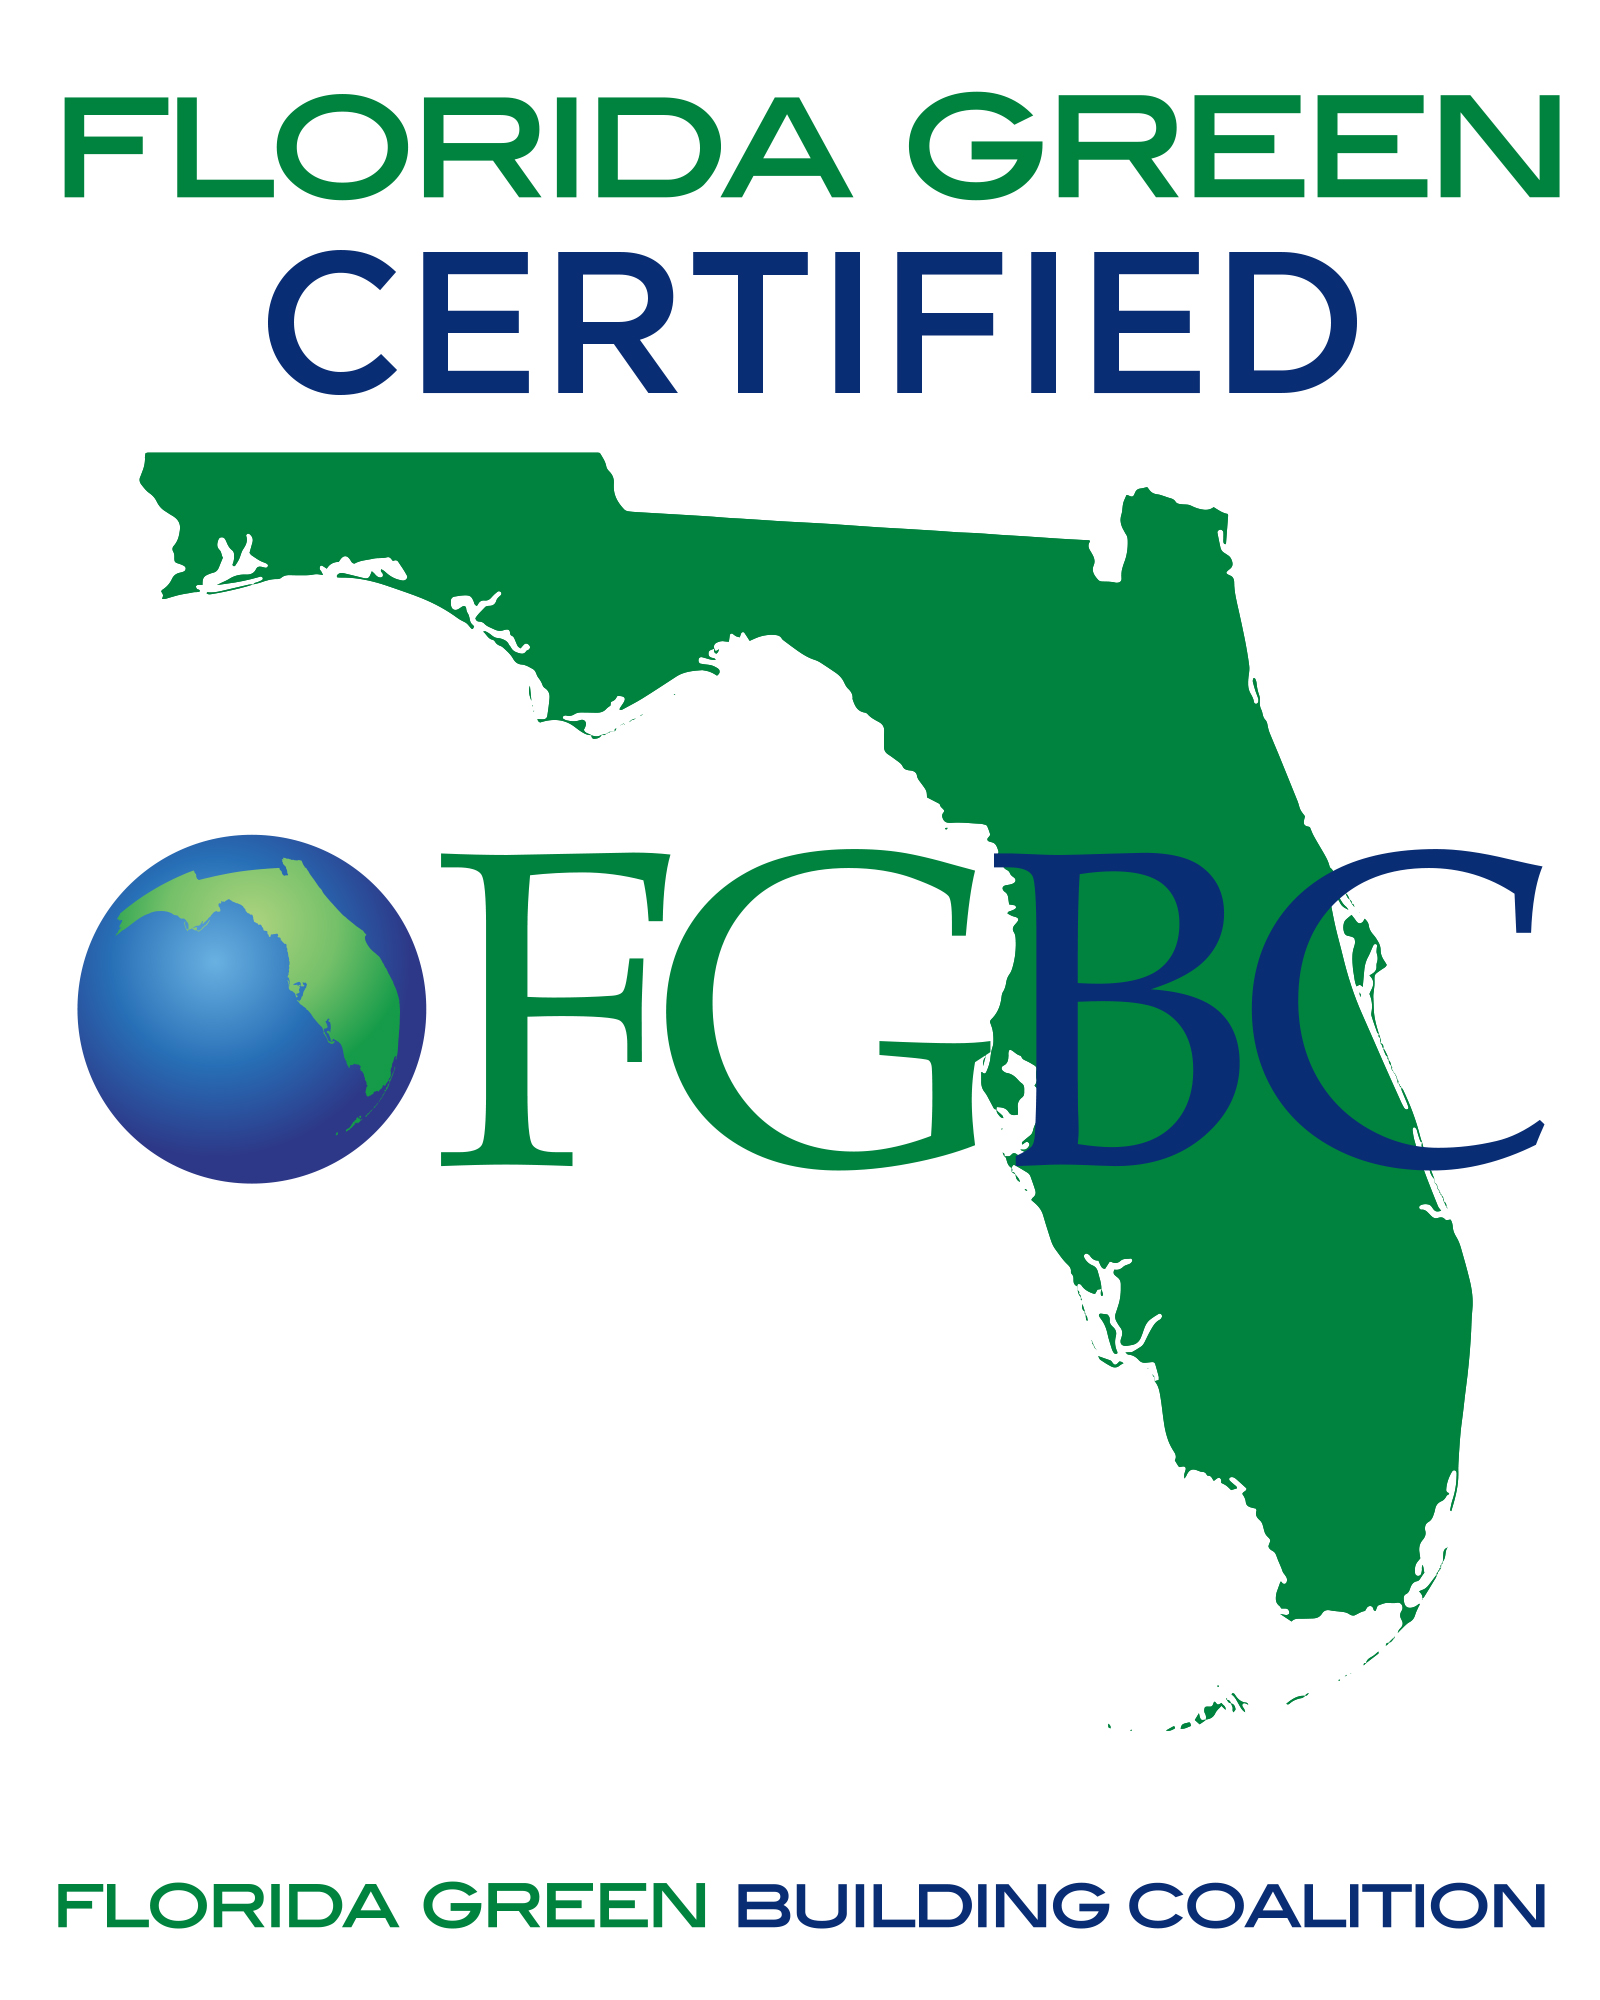 FGBC logo